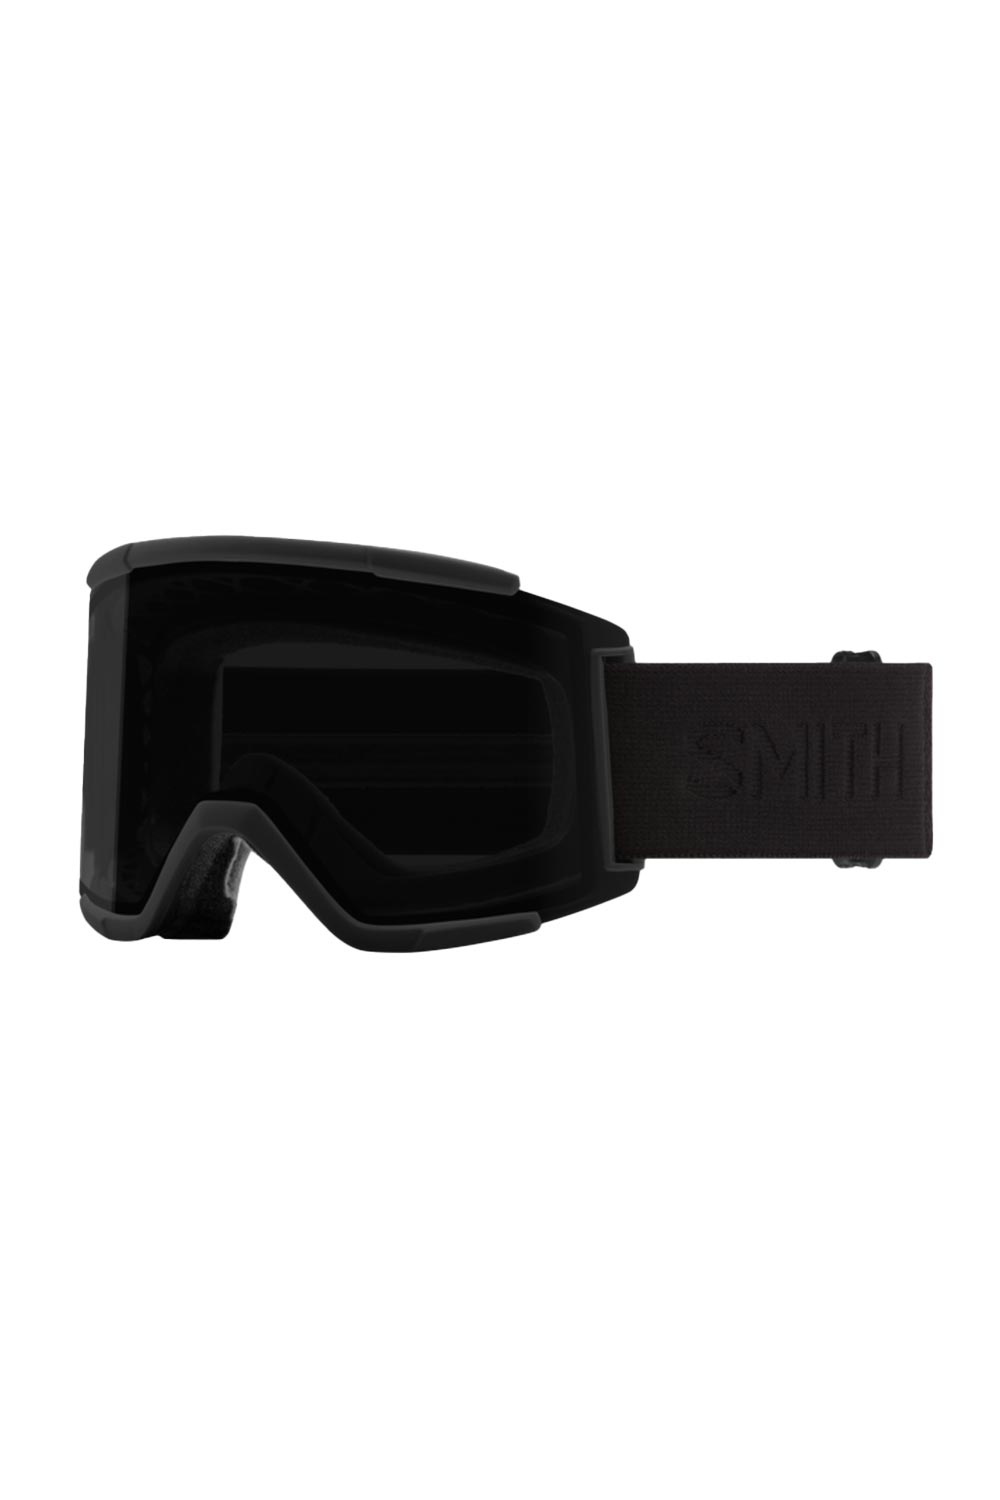 Smith Squad XL ski googles, black strap and black lens